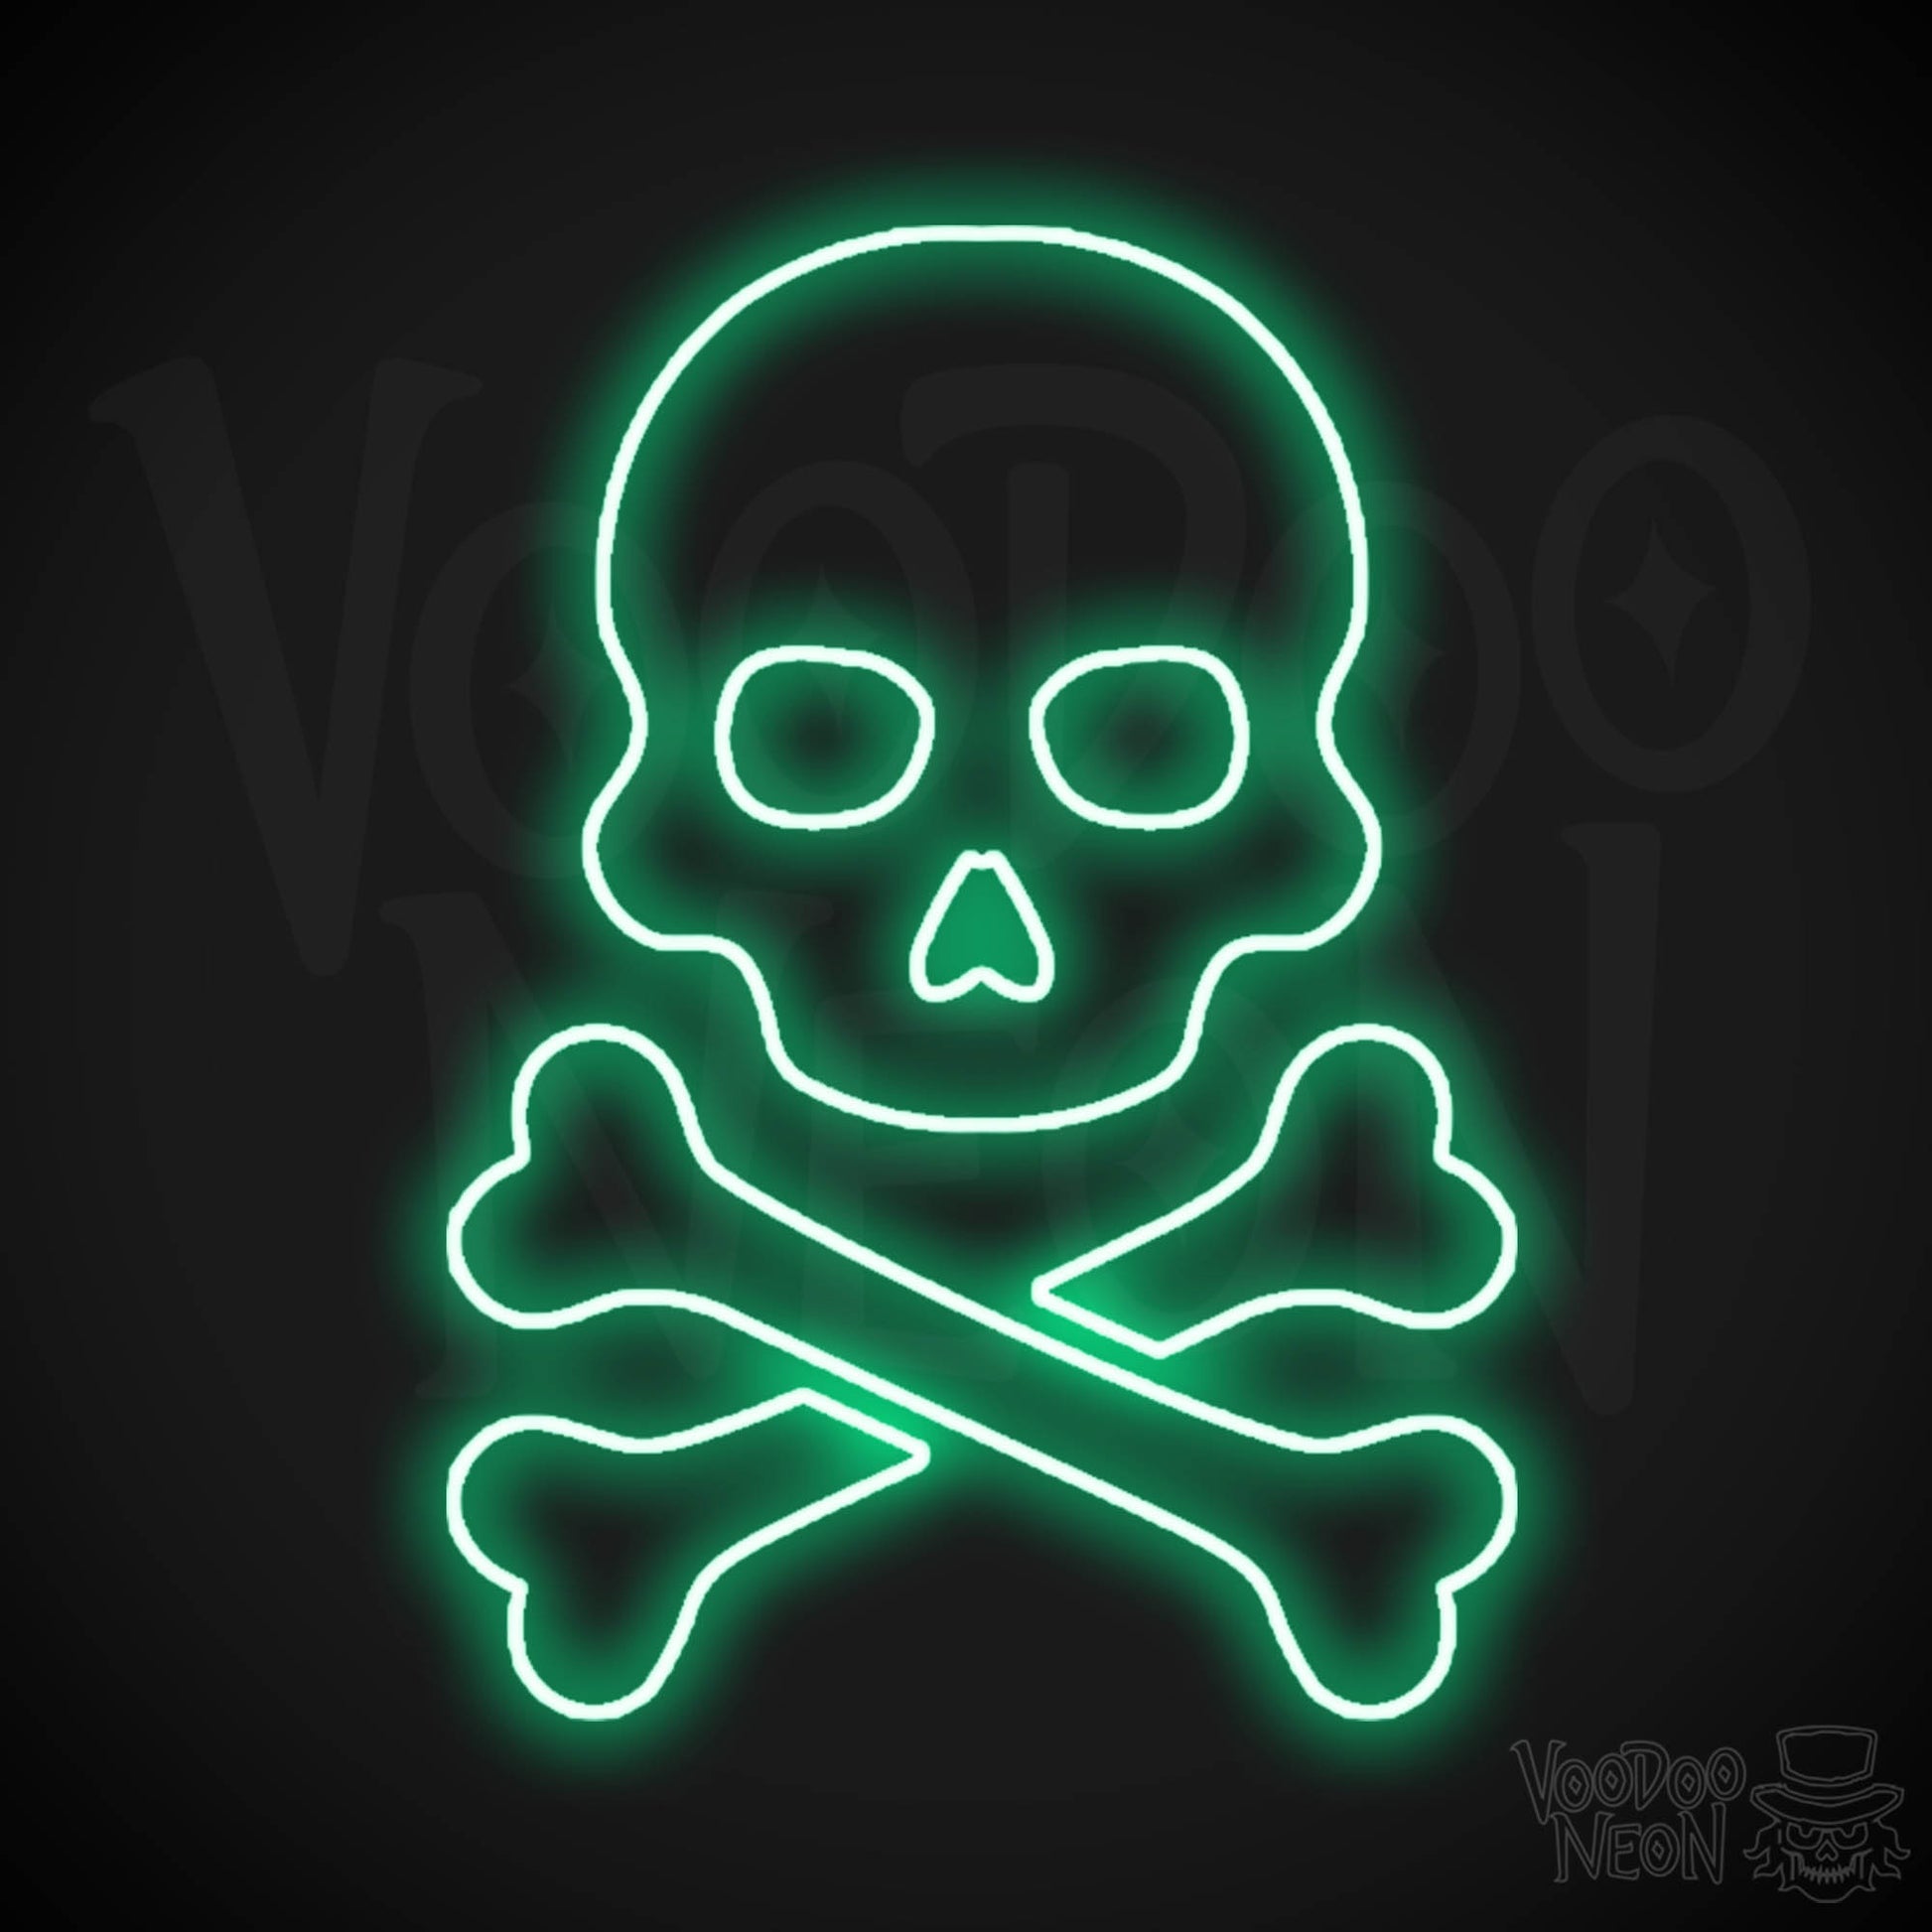 Pirate Skull & Crossbones Neon Sign - Neon Pirate Skull & Crossbones Sign - LED Lights - Color Green